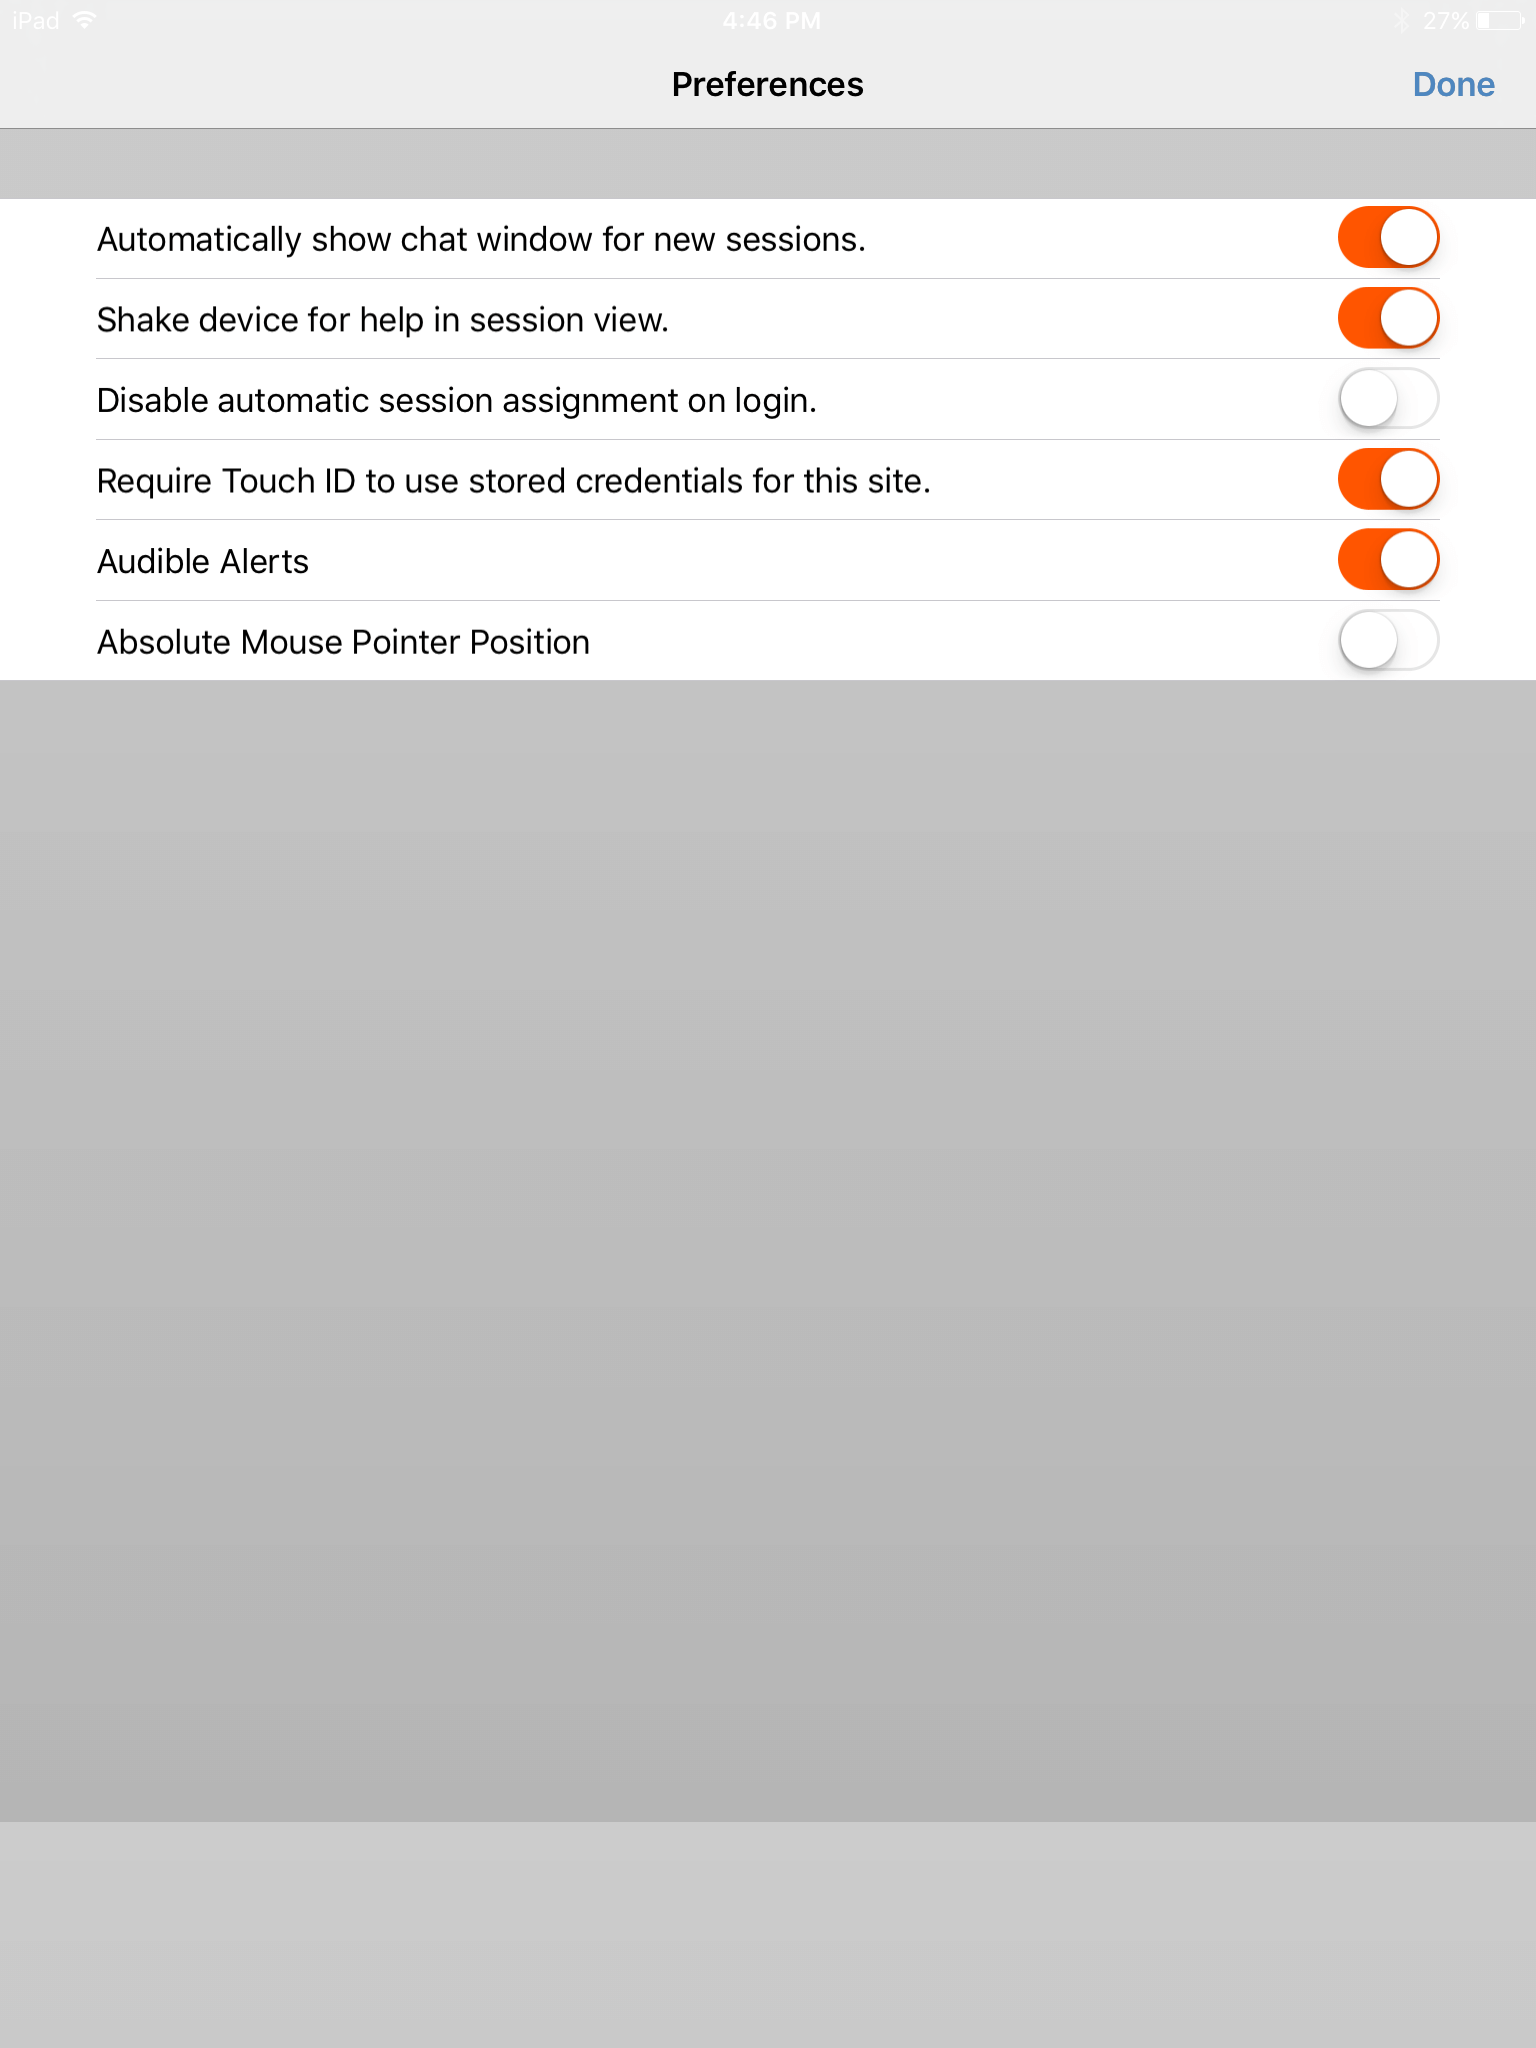 iOS Mobile Representative Console Preferences, Require Touch ID option